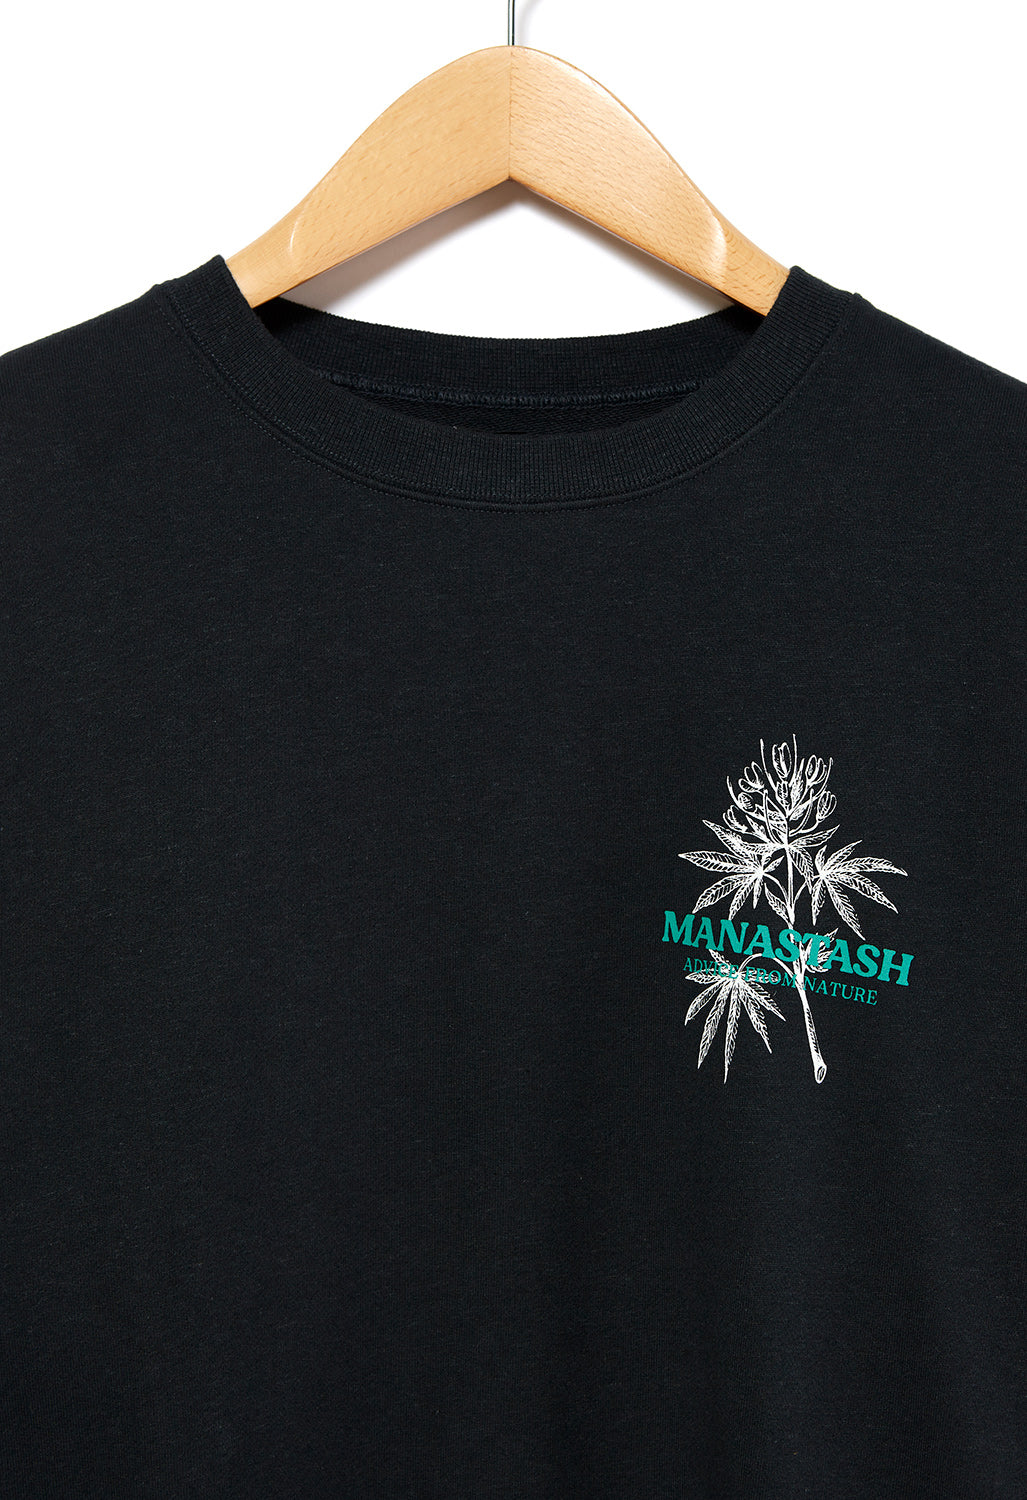 Manastash Men's Cascade Sweatshirts AFN Logo - Black